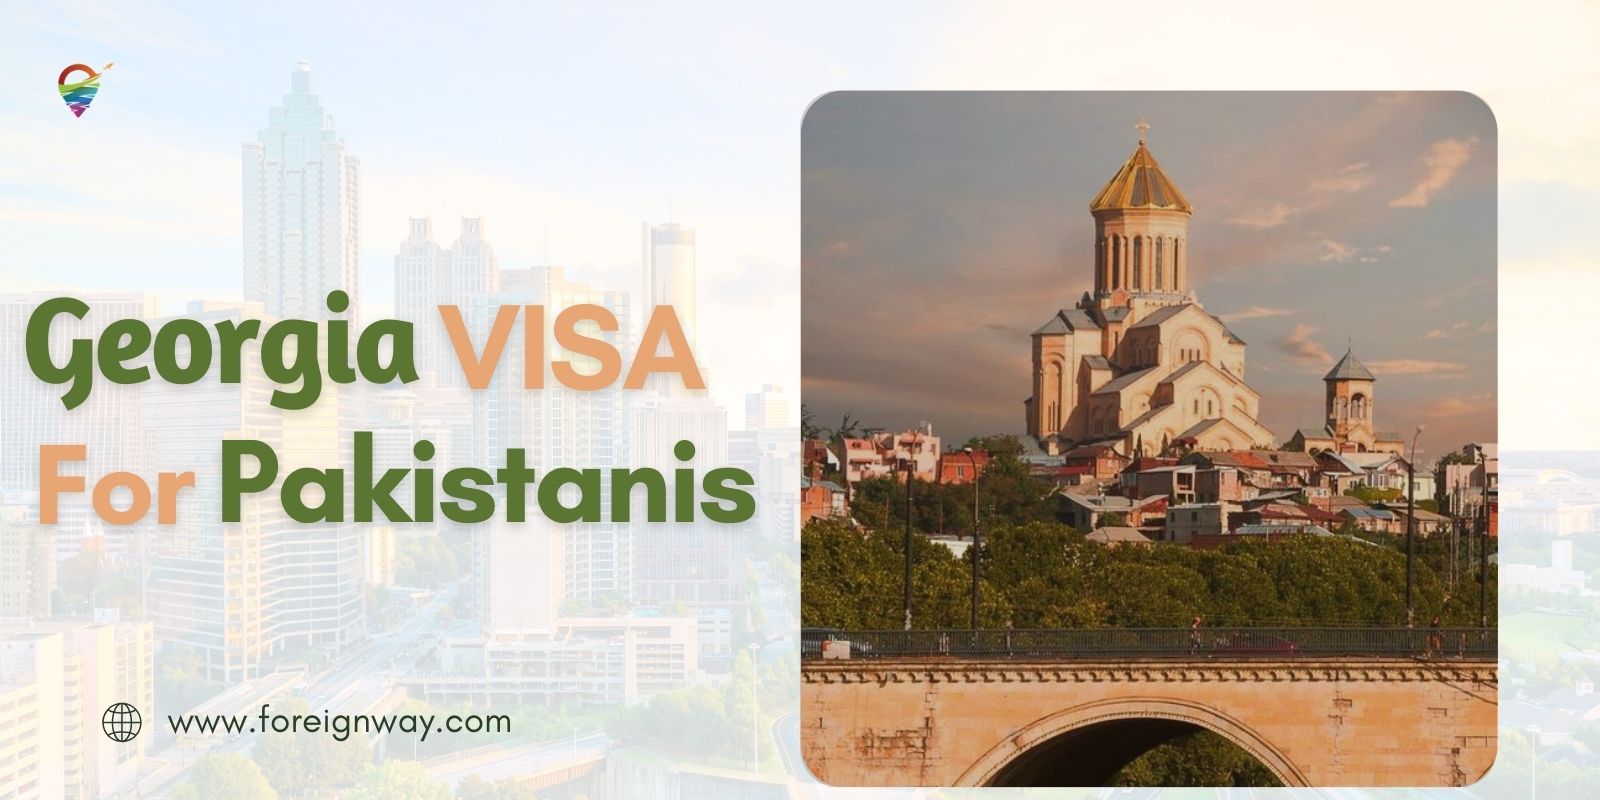 Georgia visa for Pakistanis